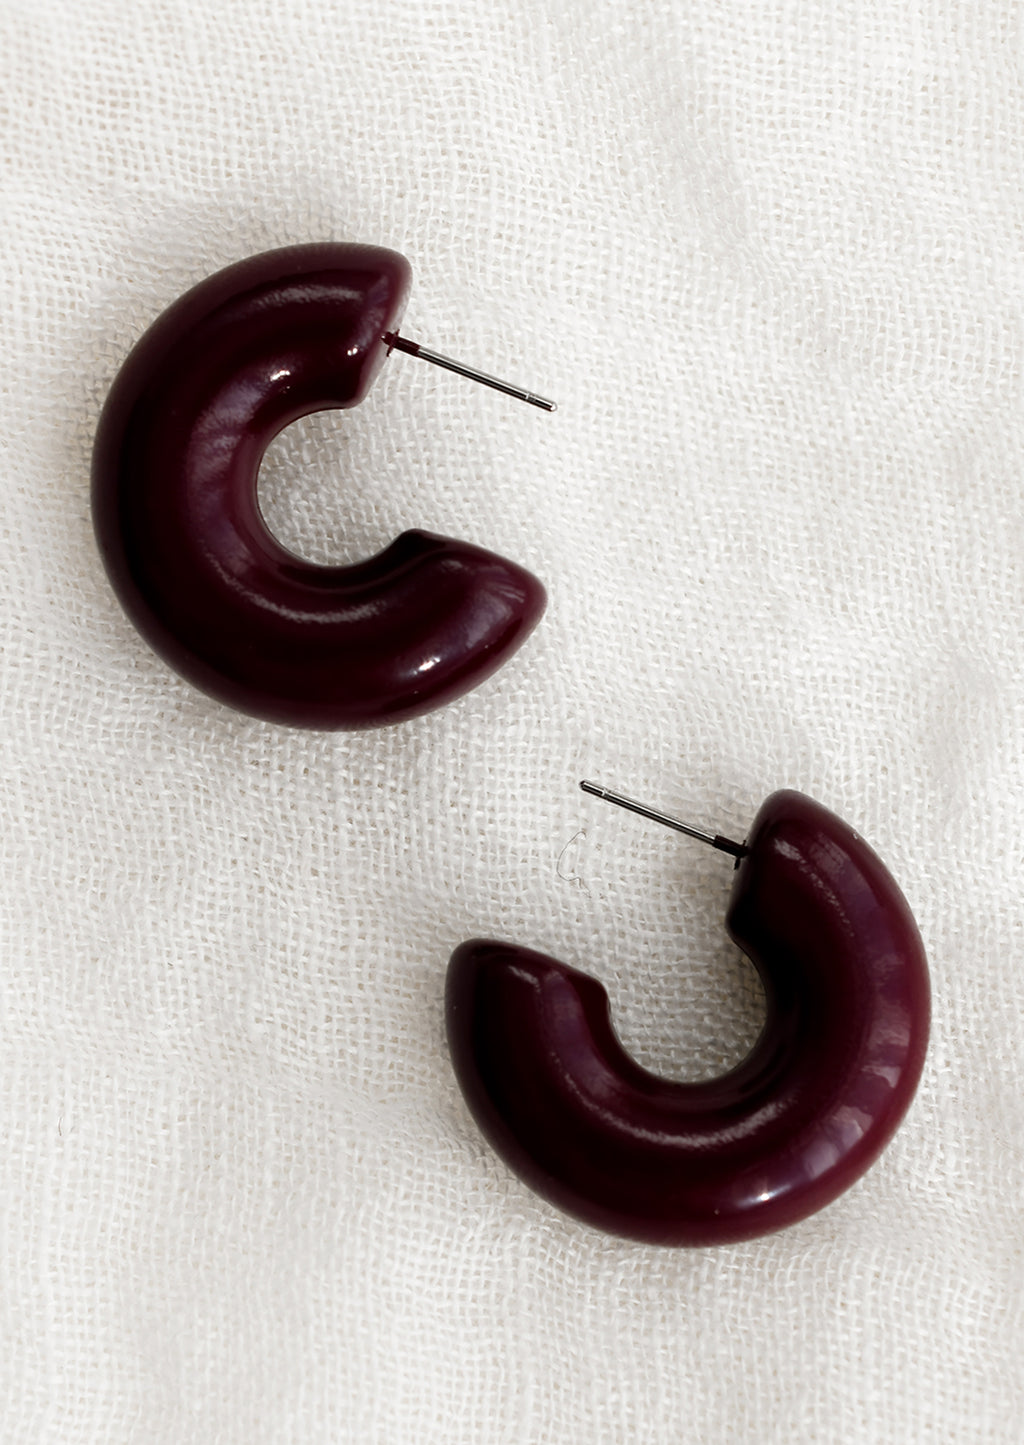 Raisin: A pair of chunky gloss finish hoop earrings in raisin purple-brown.